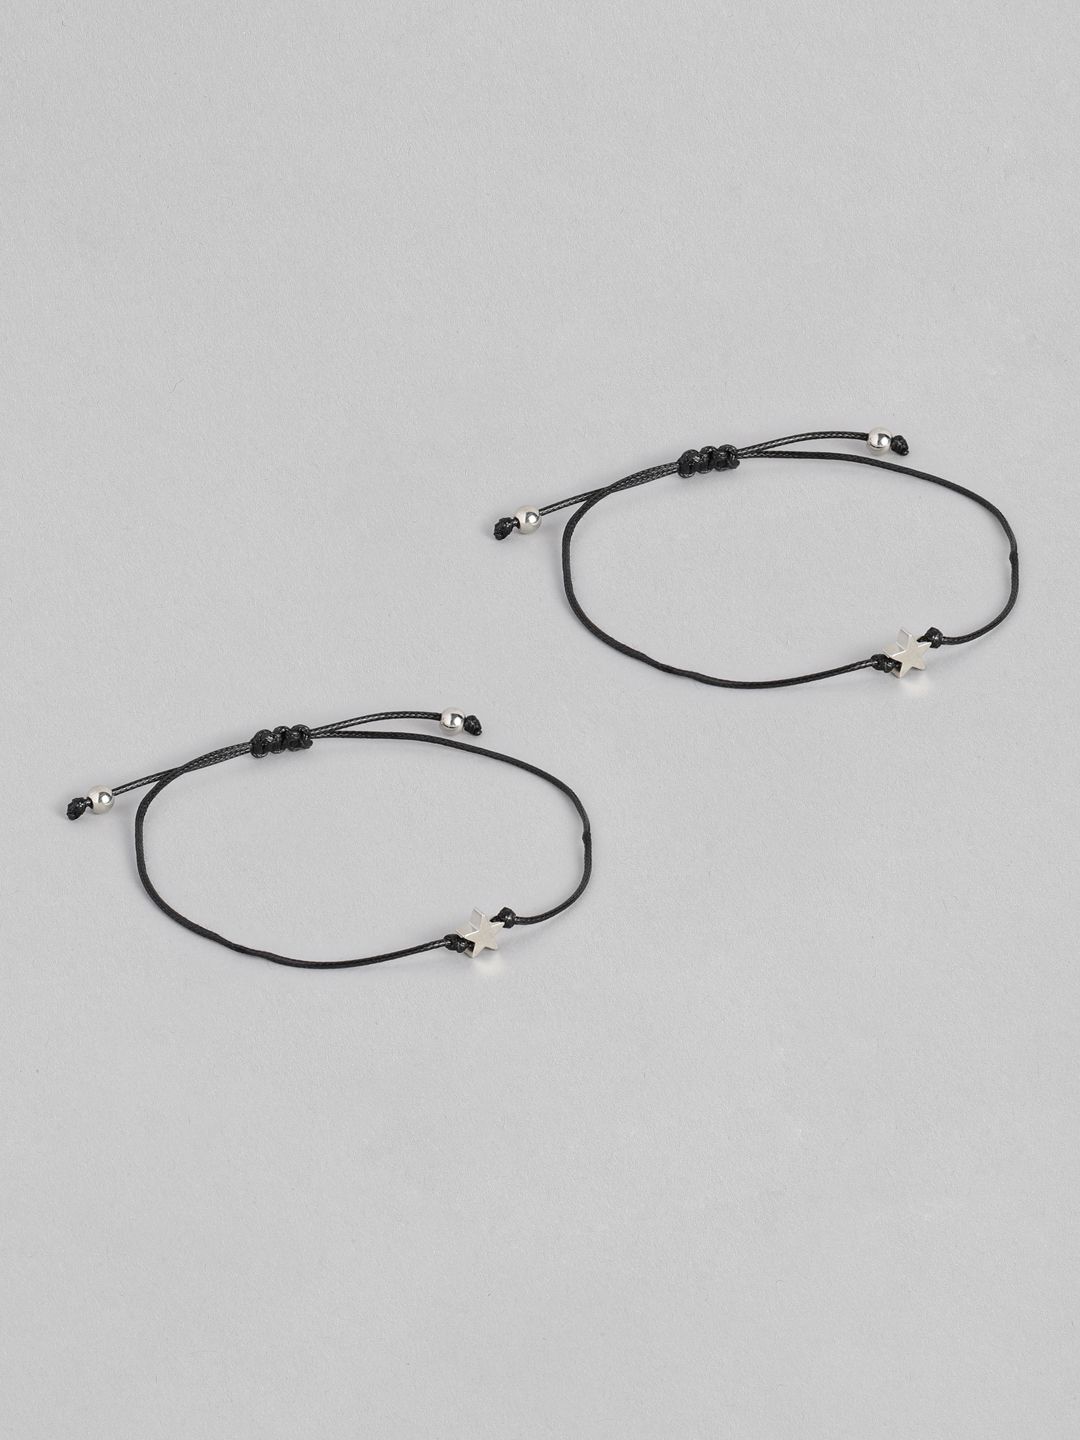 EL REGALO Unisex Pack of 2 Black & Silver-Toned Charm Bracelet Price in India